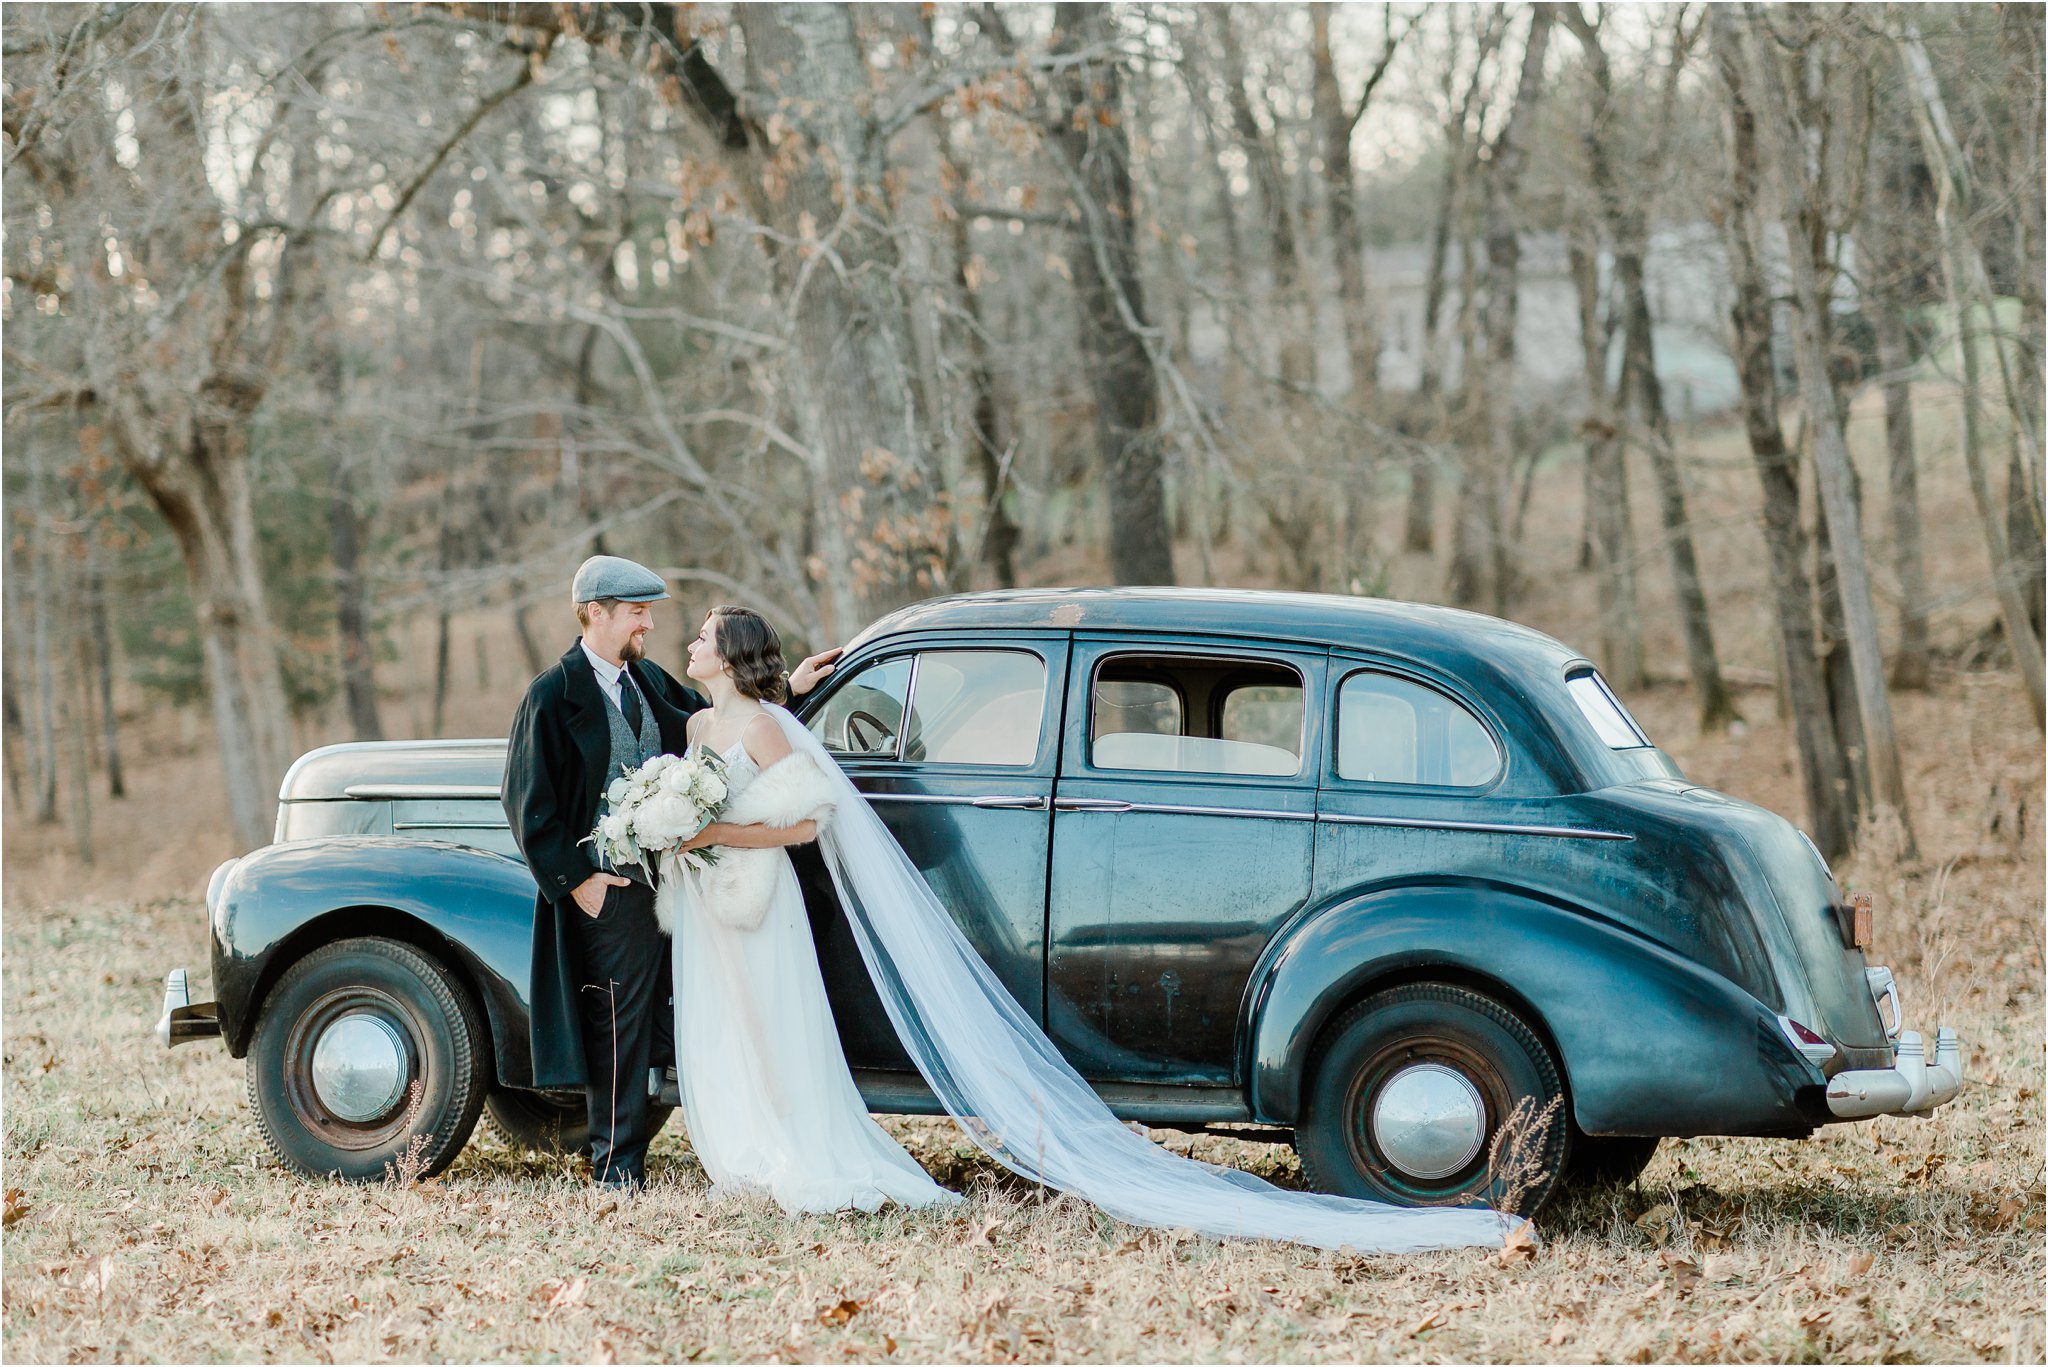 A Vintage Wedding